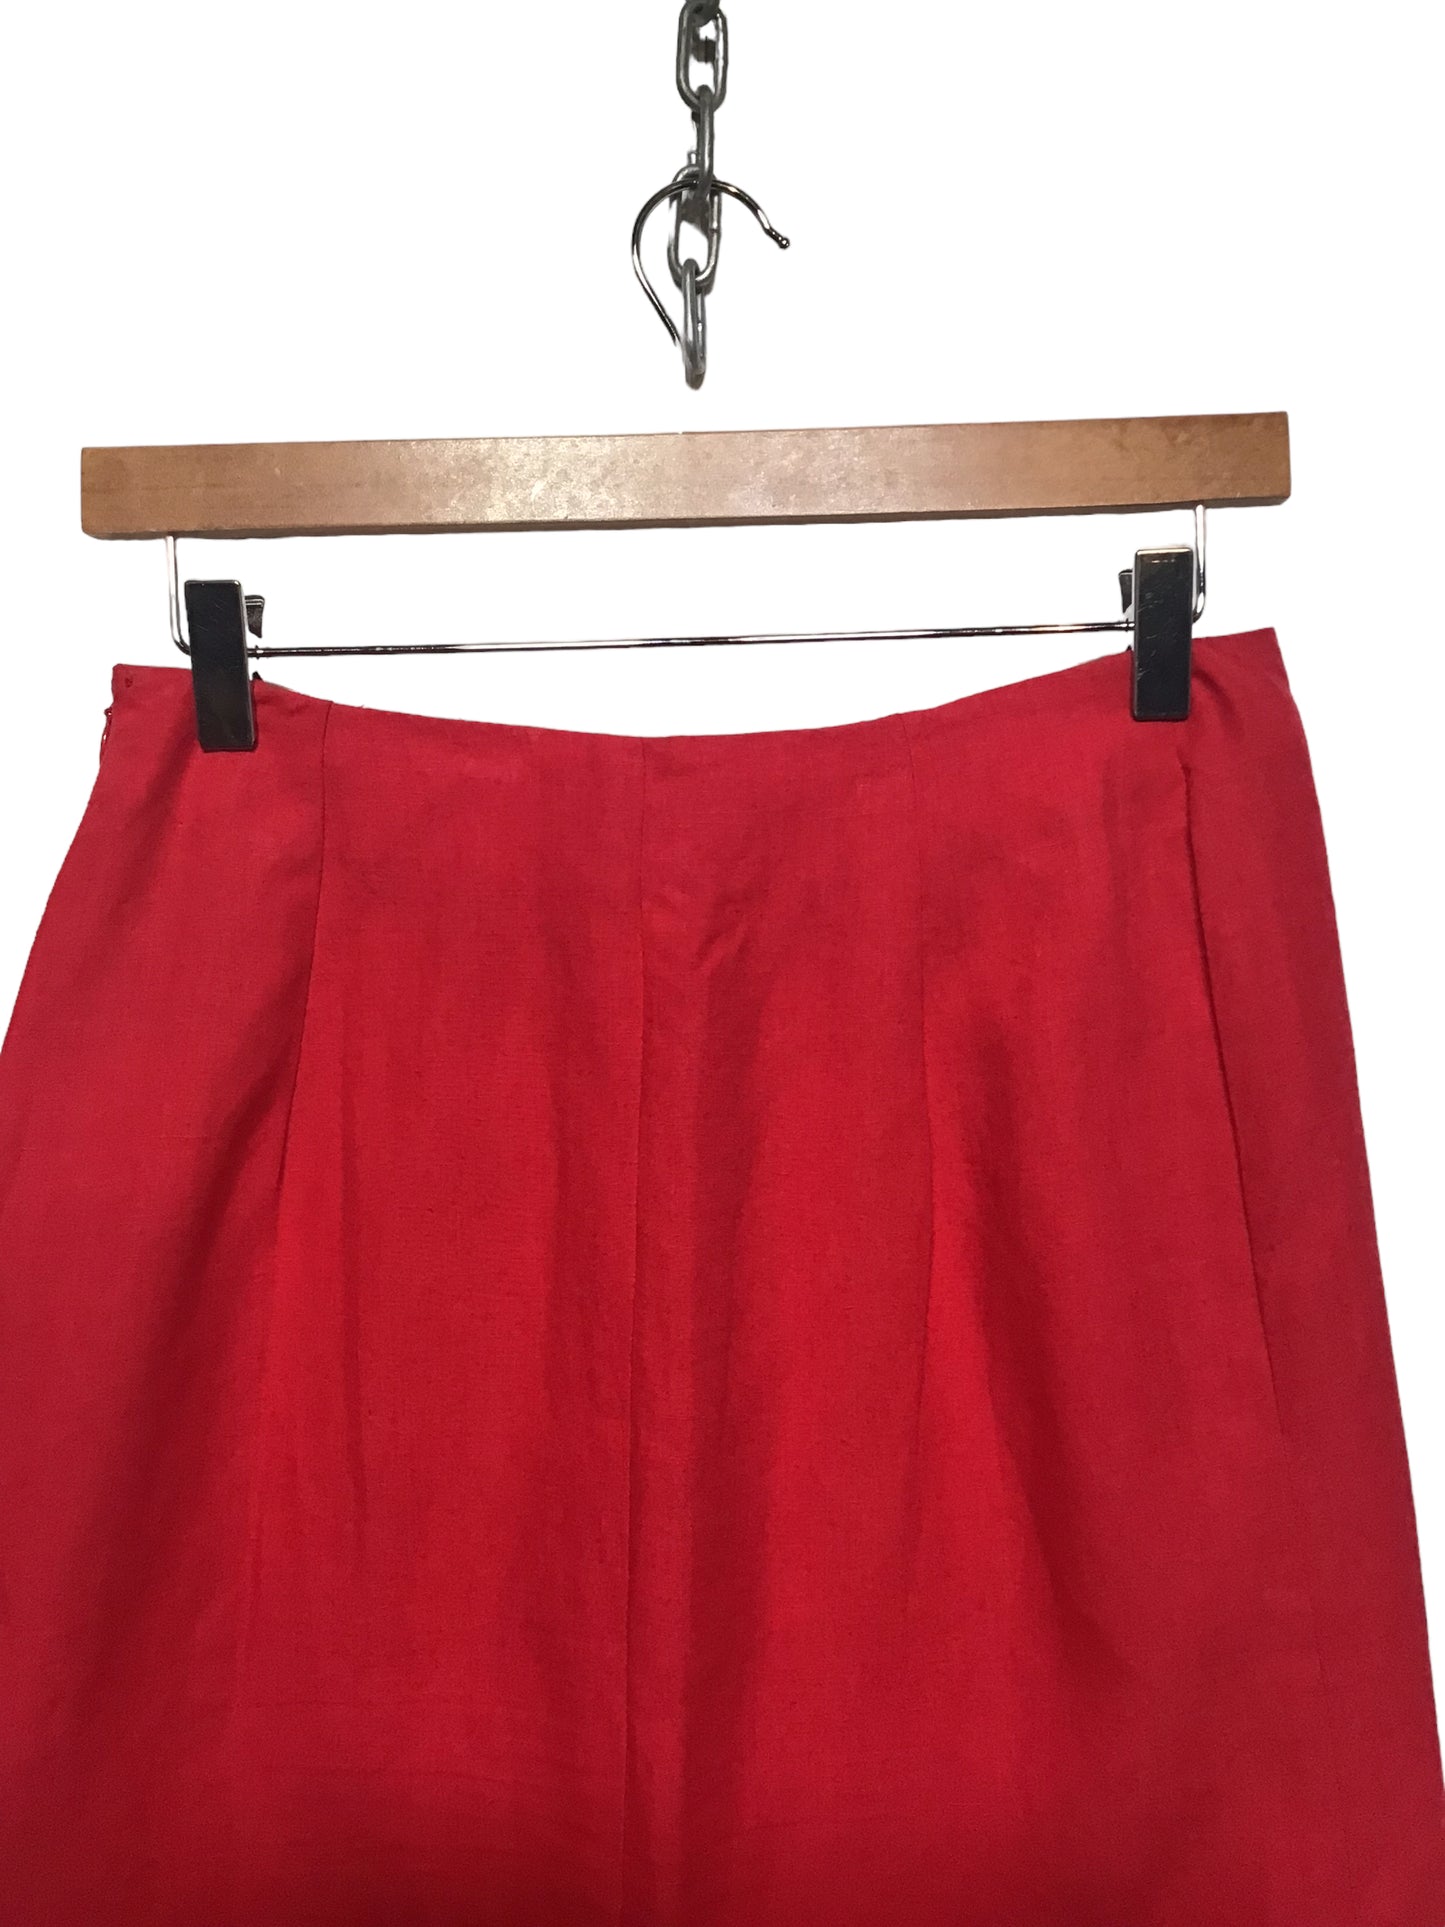 Red Linen Skirt (Size M)